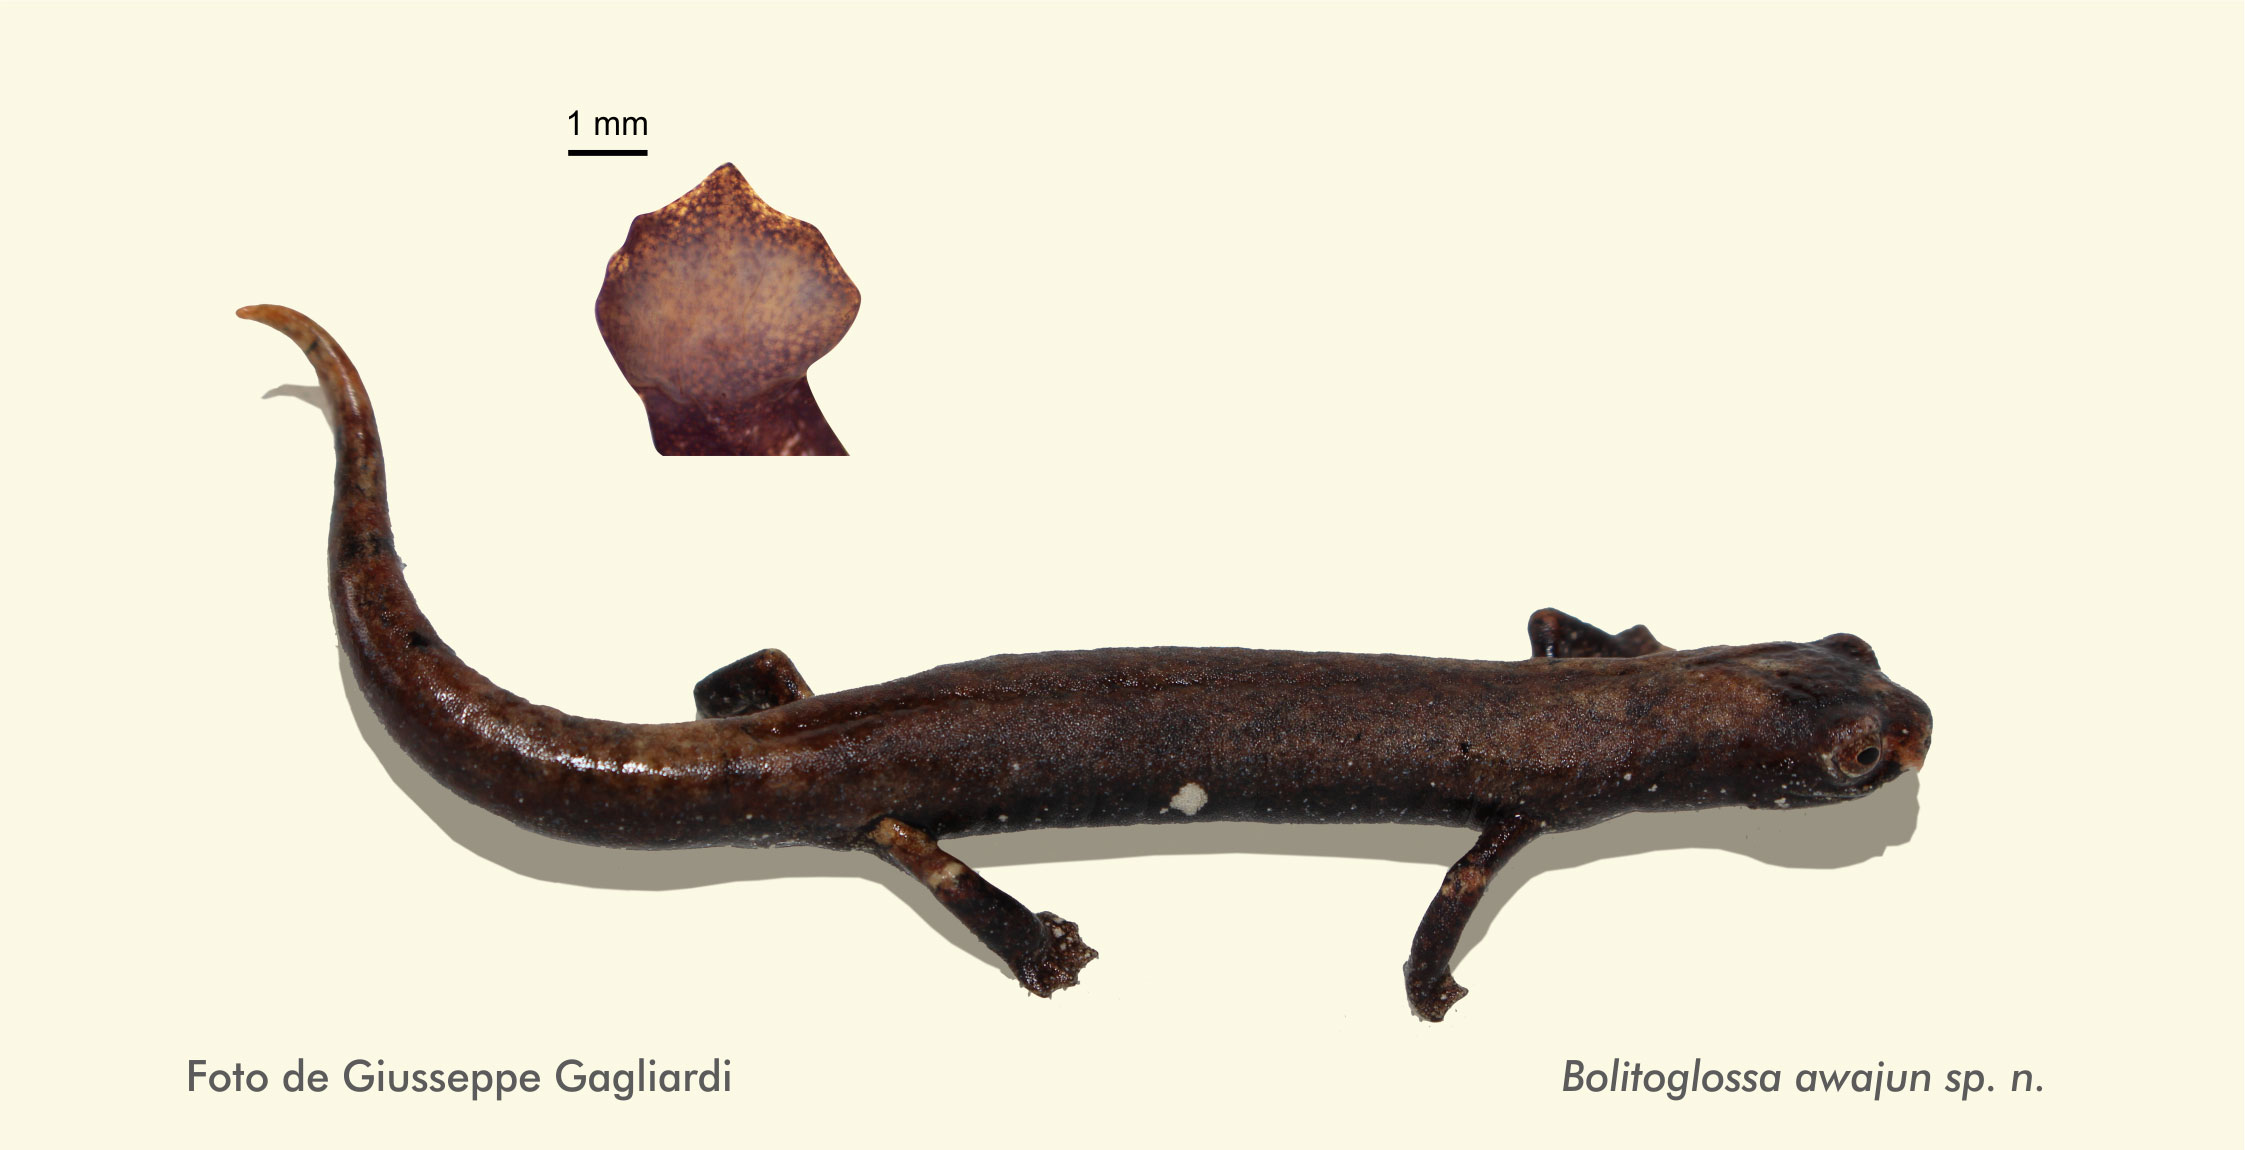 Salamandra Bolitoglossa awajun